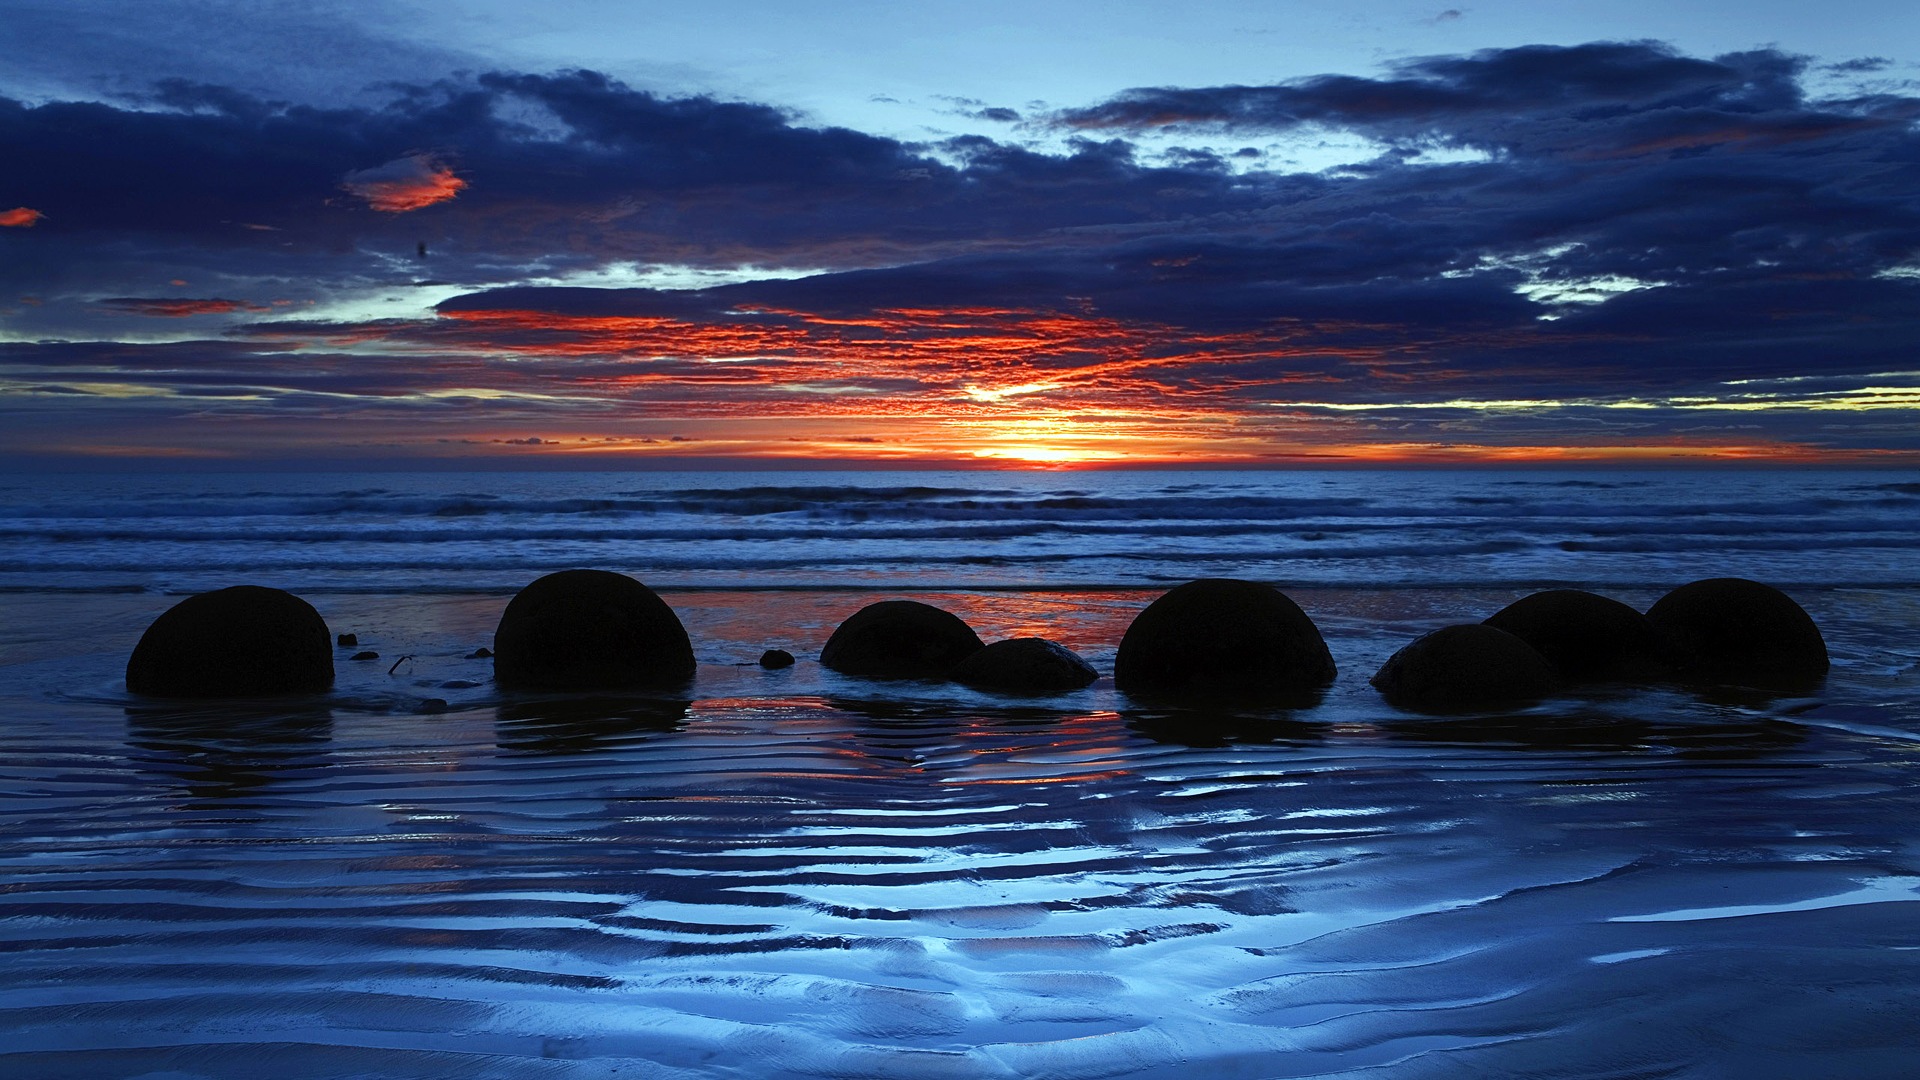 Windows 8 theme wallpaper: Beach sunrise and sunset views #14 - 1920x1080